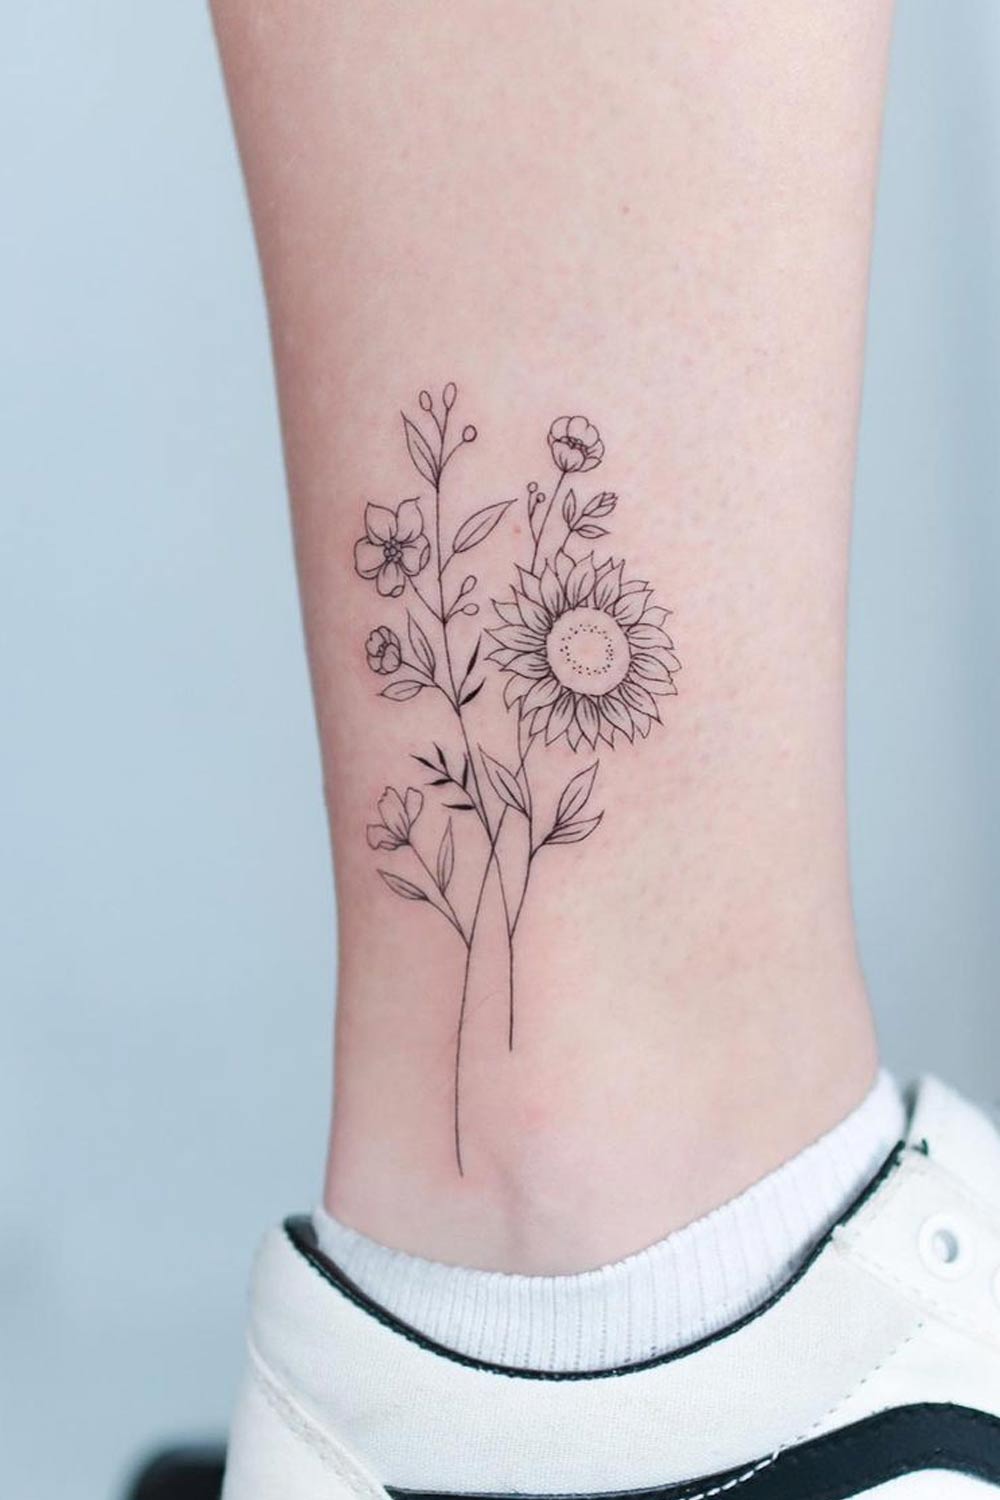 235 Unique Small Tattoo Ideas For Women To Copy in 2023